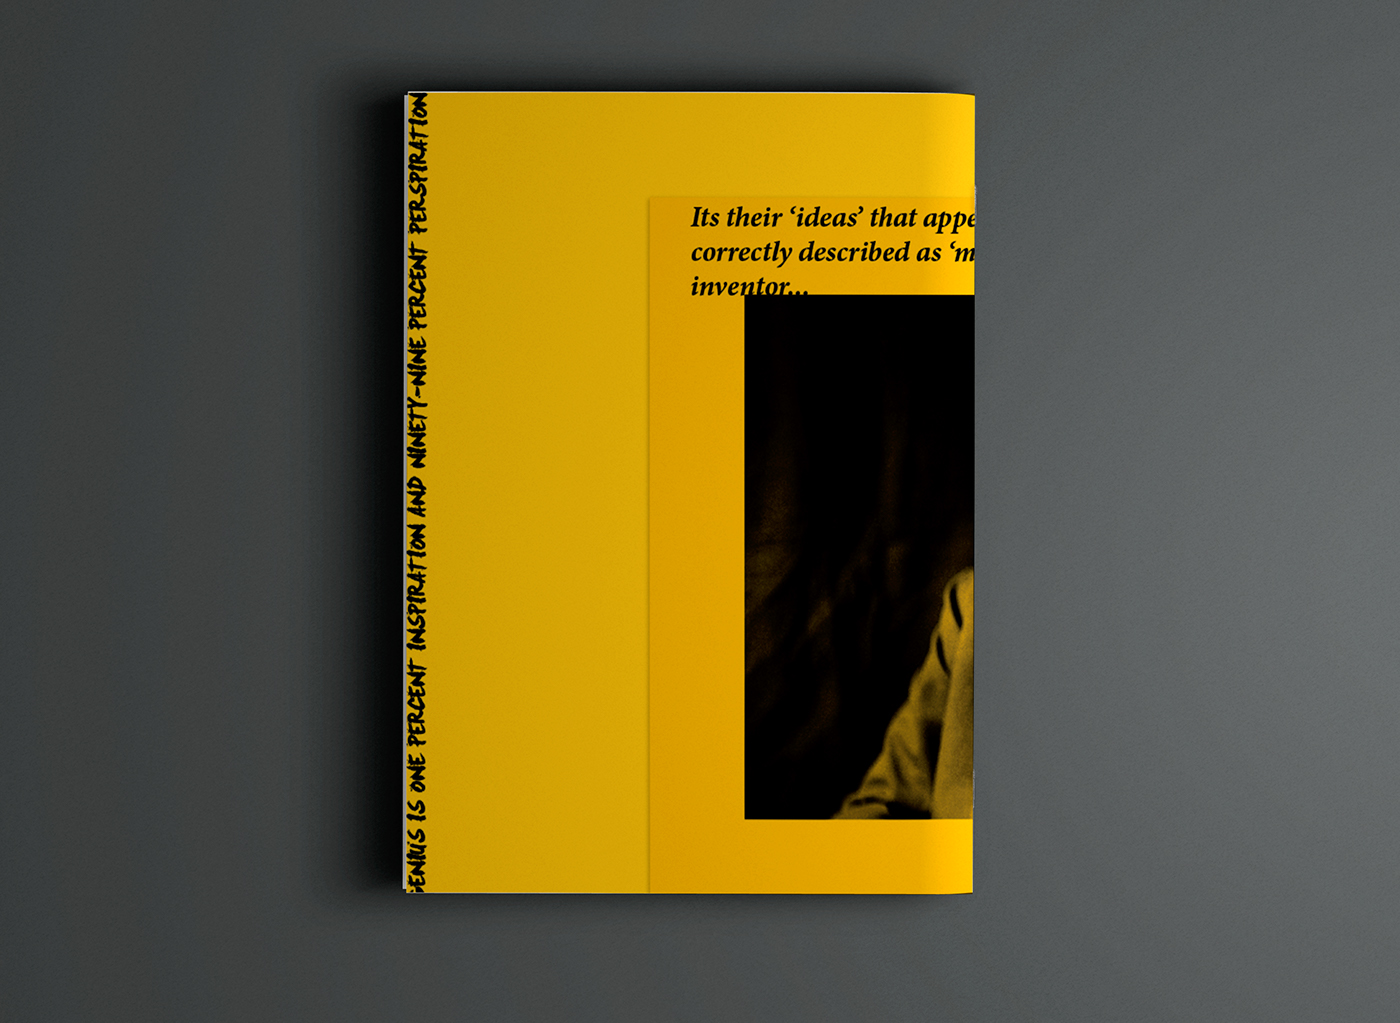 book Booklet magazine edison Layout contemporary experimental grunge brush print publication design texture science modern